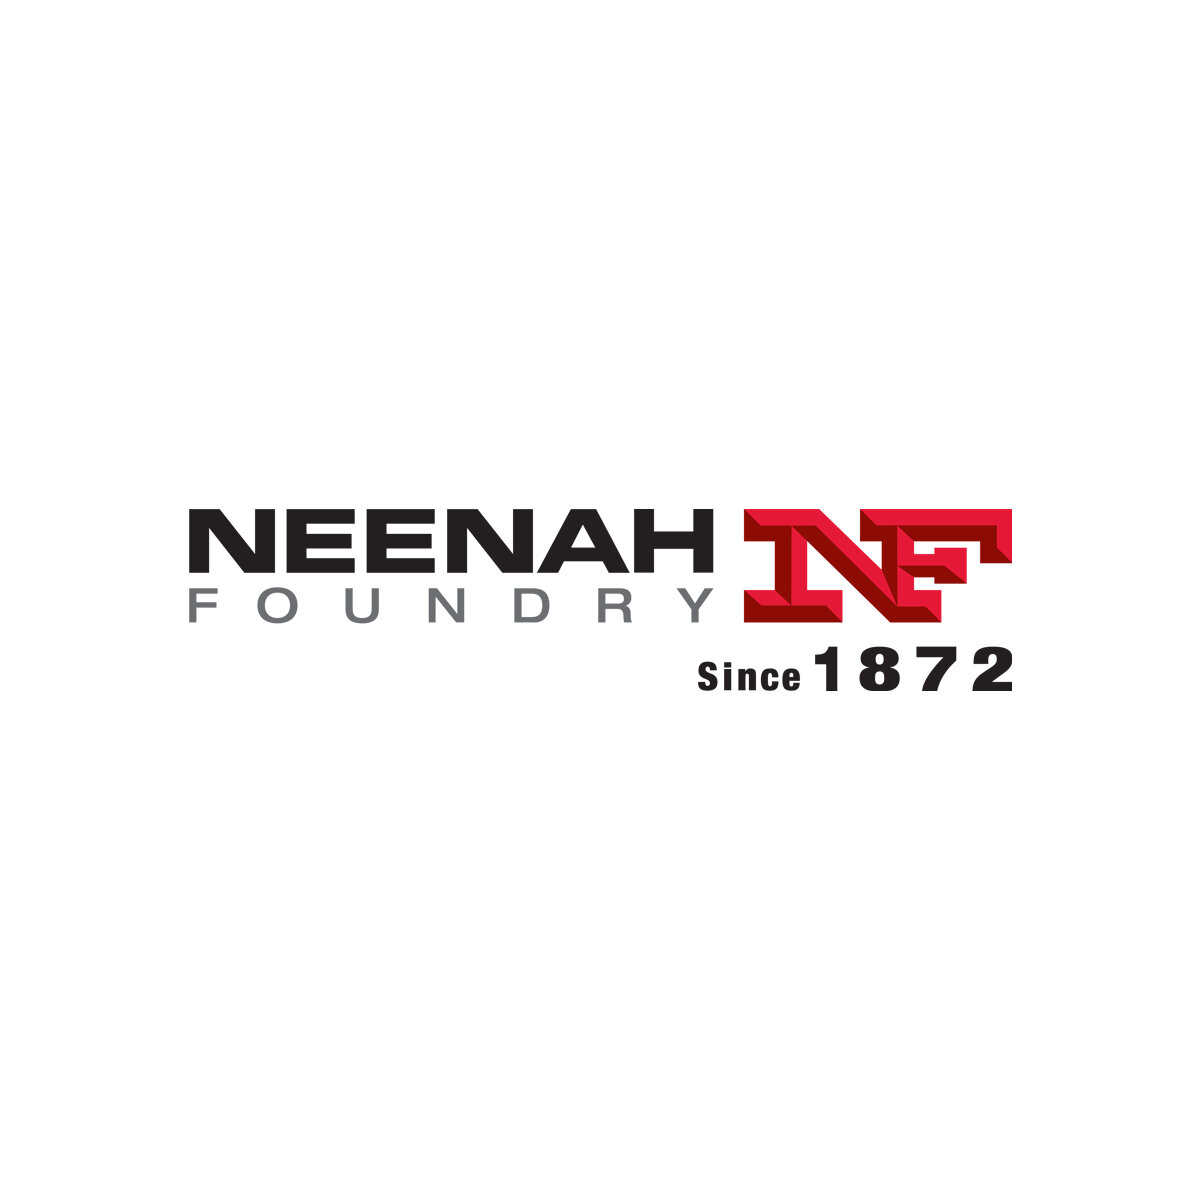 Neenah Foundry logo.jpg